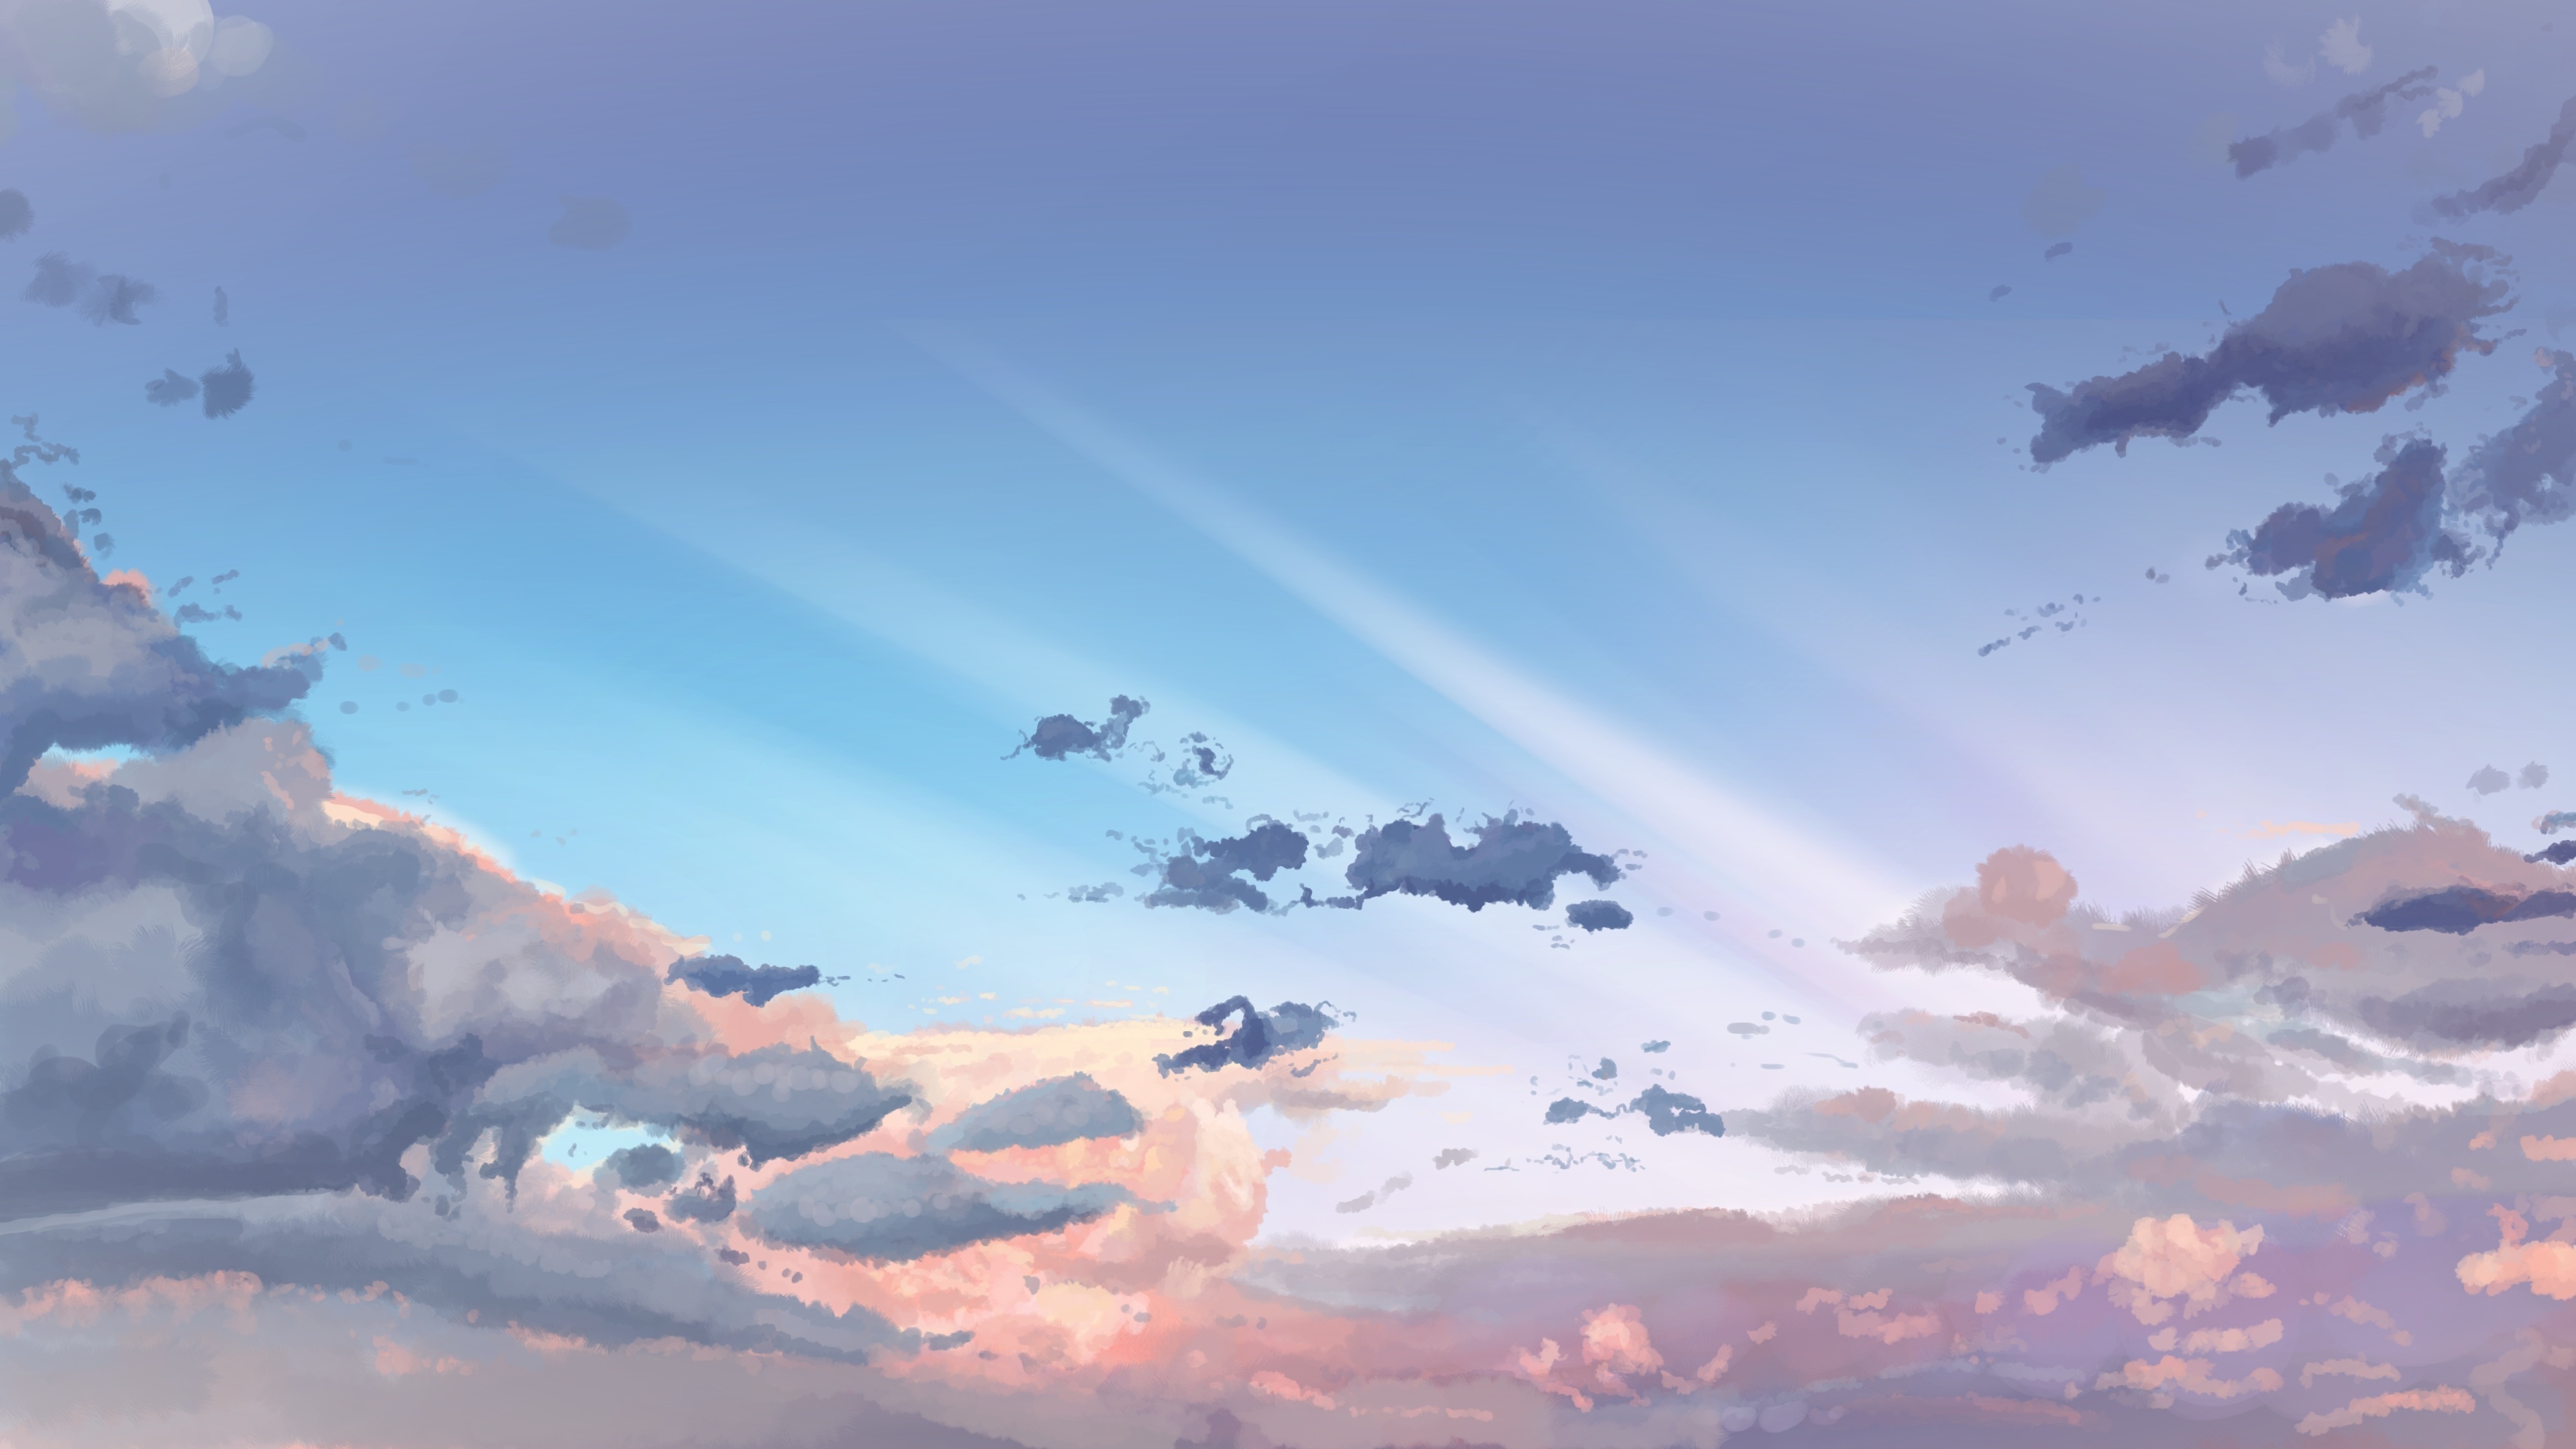 Download 3840x2160 Wallpaper Sky Clouds Original Anime 4k Uhd 16 9 Widescreen 3840x2160 Hd Image Background 4501